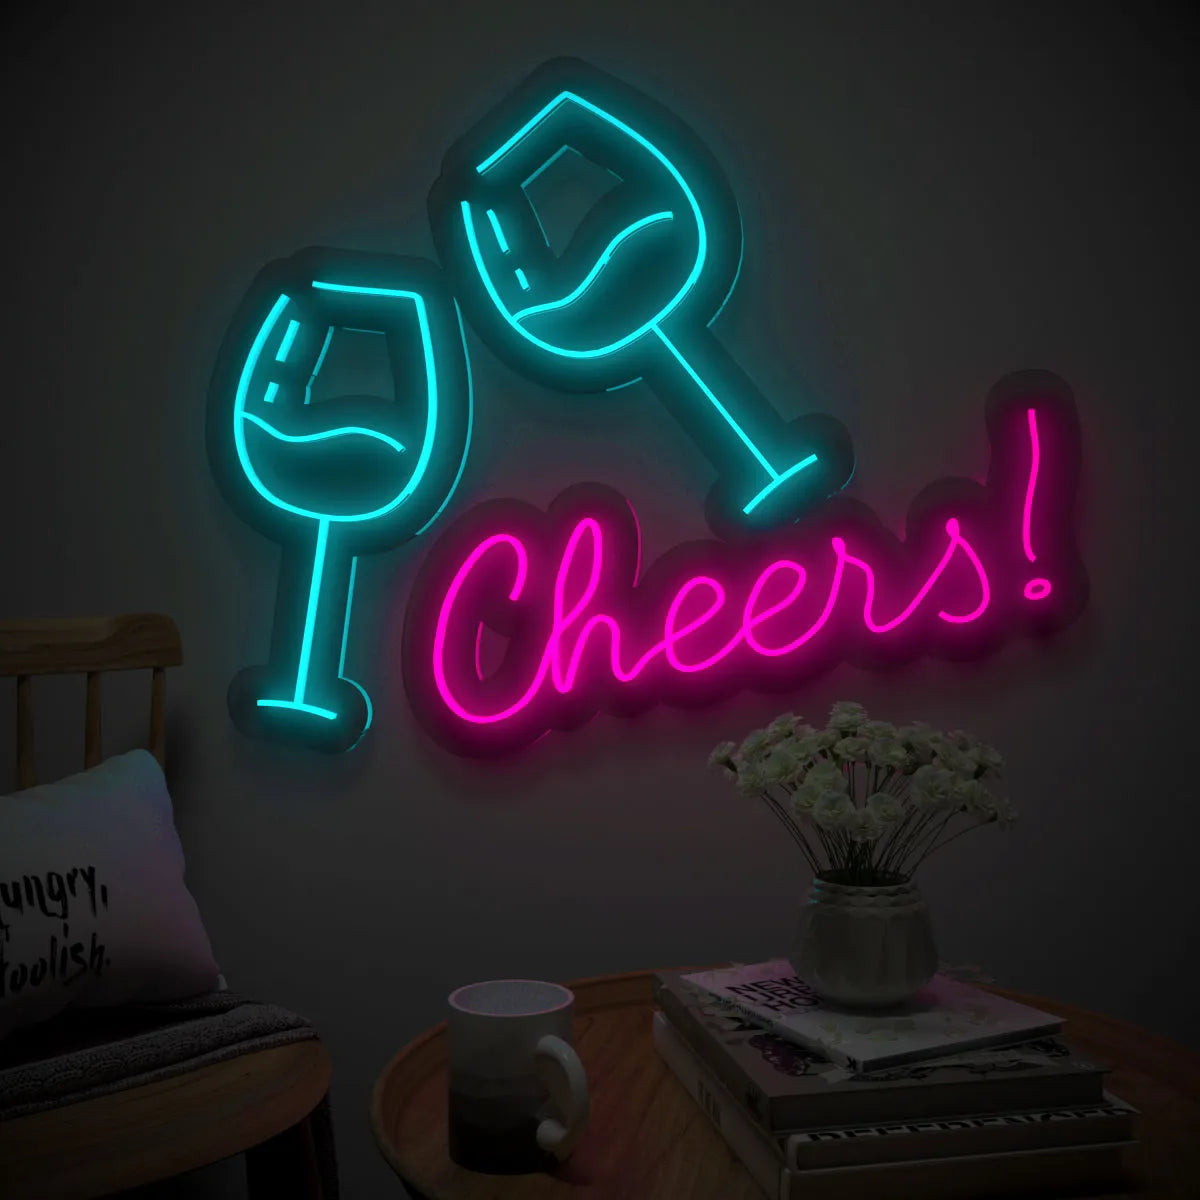 “Cheers” Wine Glass Neon LED Light